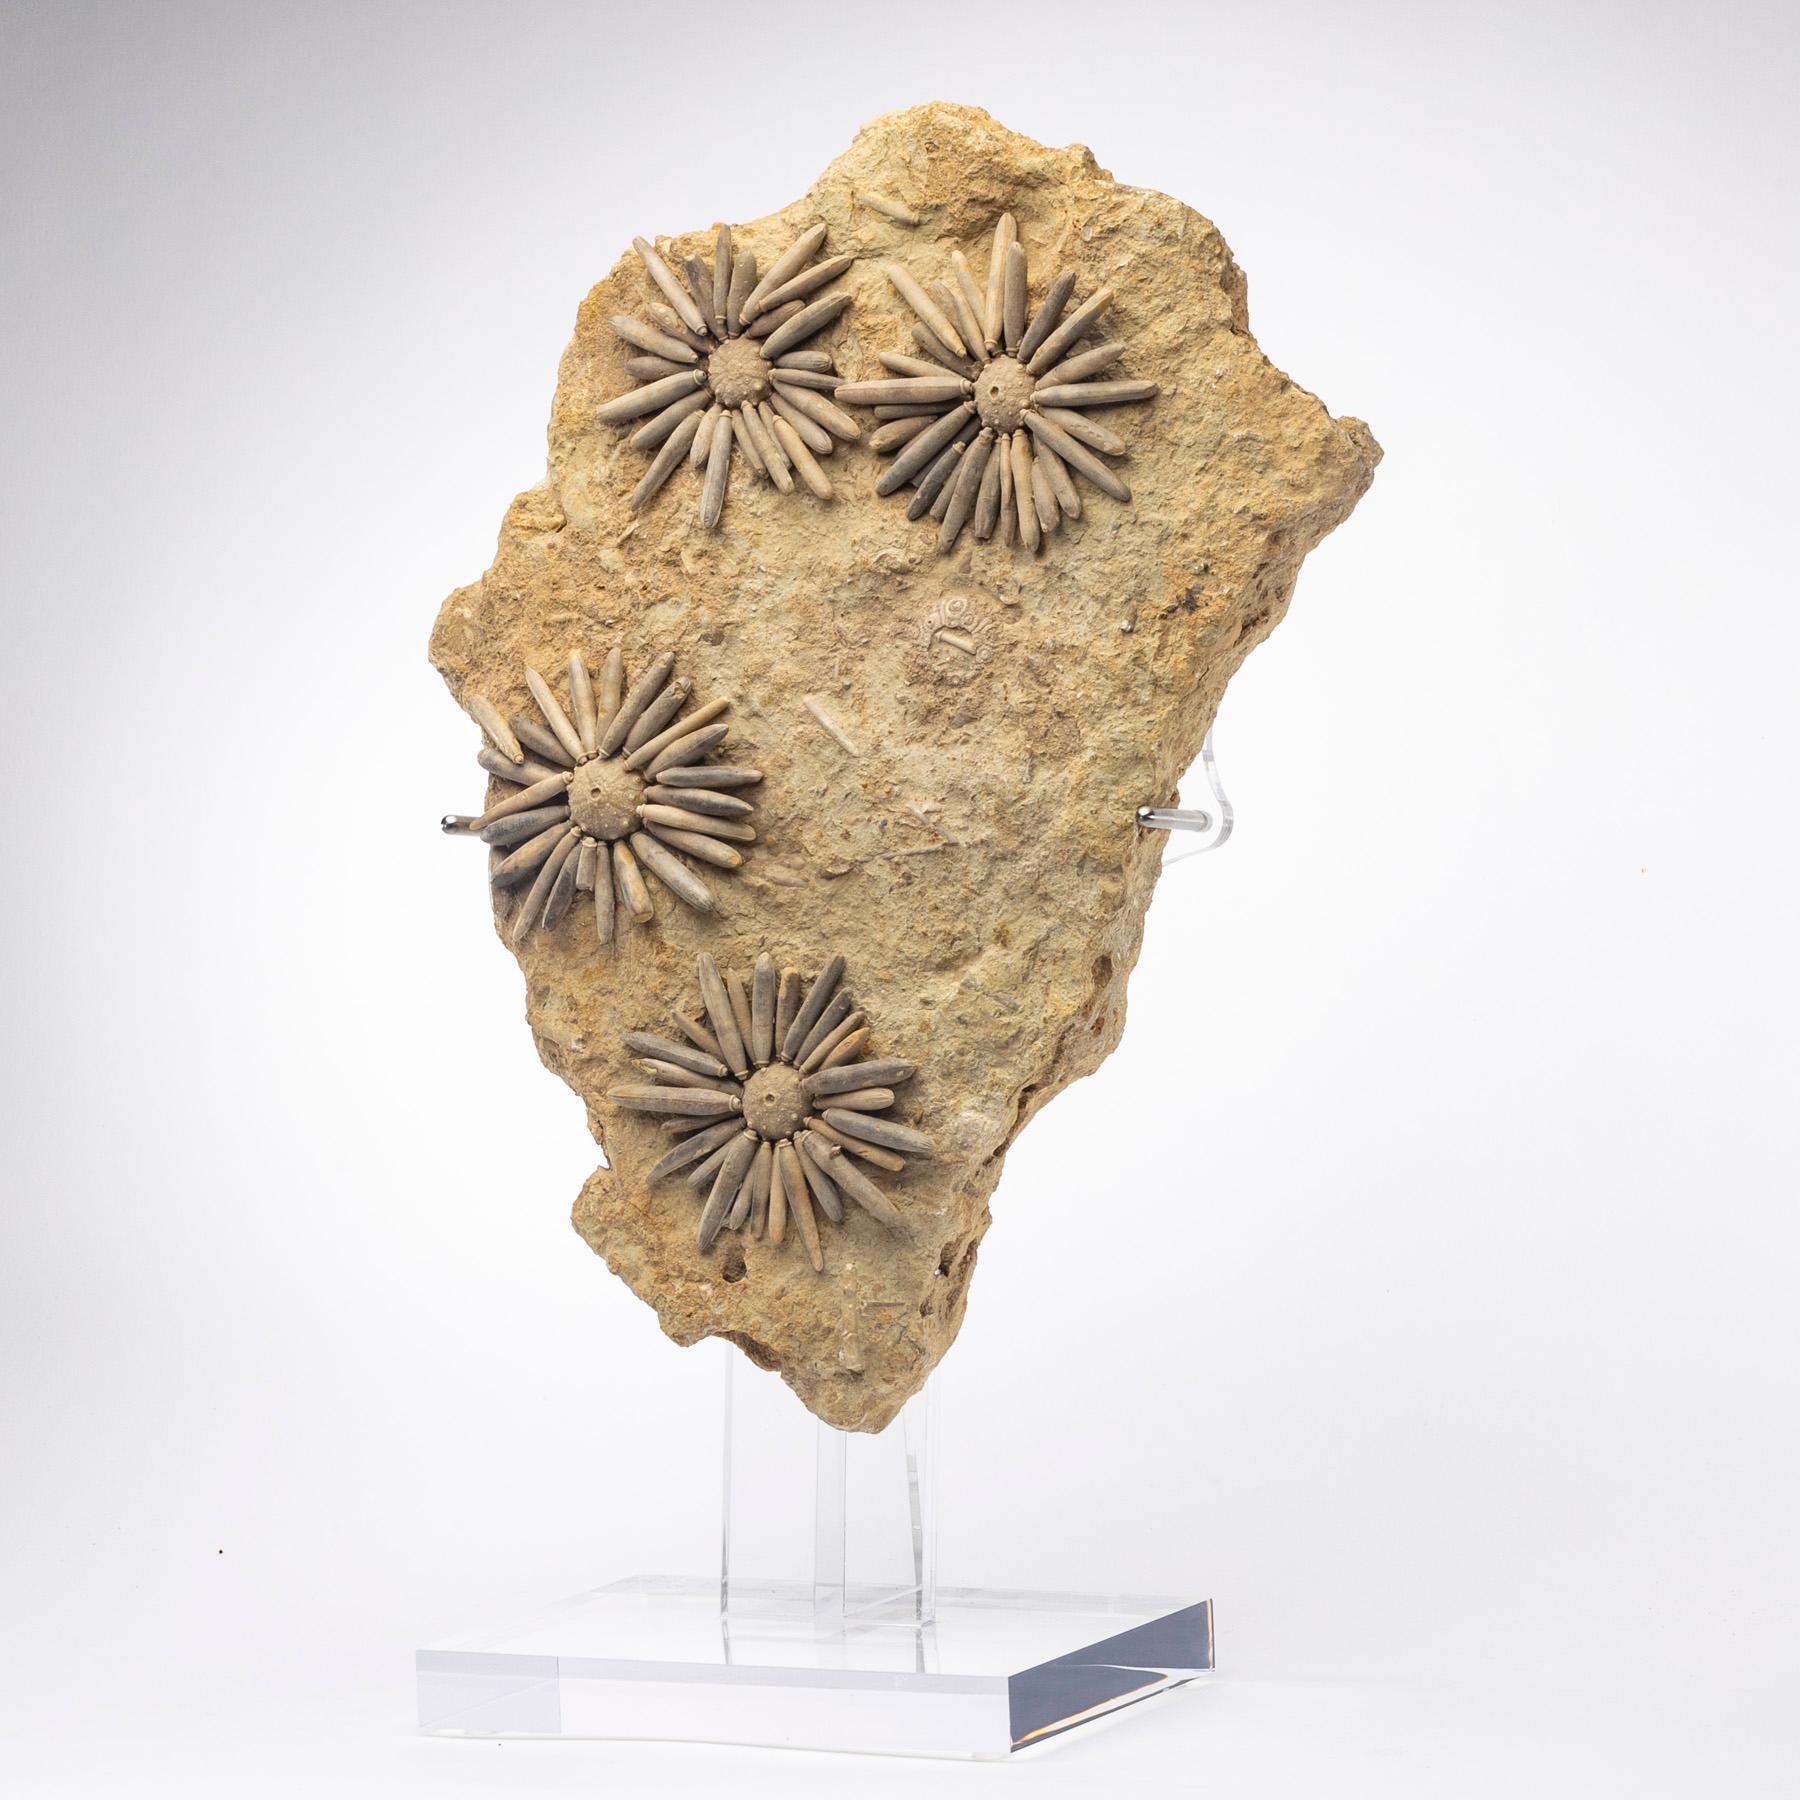 sea urchin spine fossil